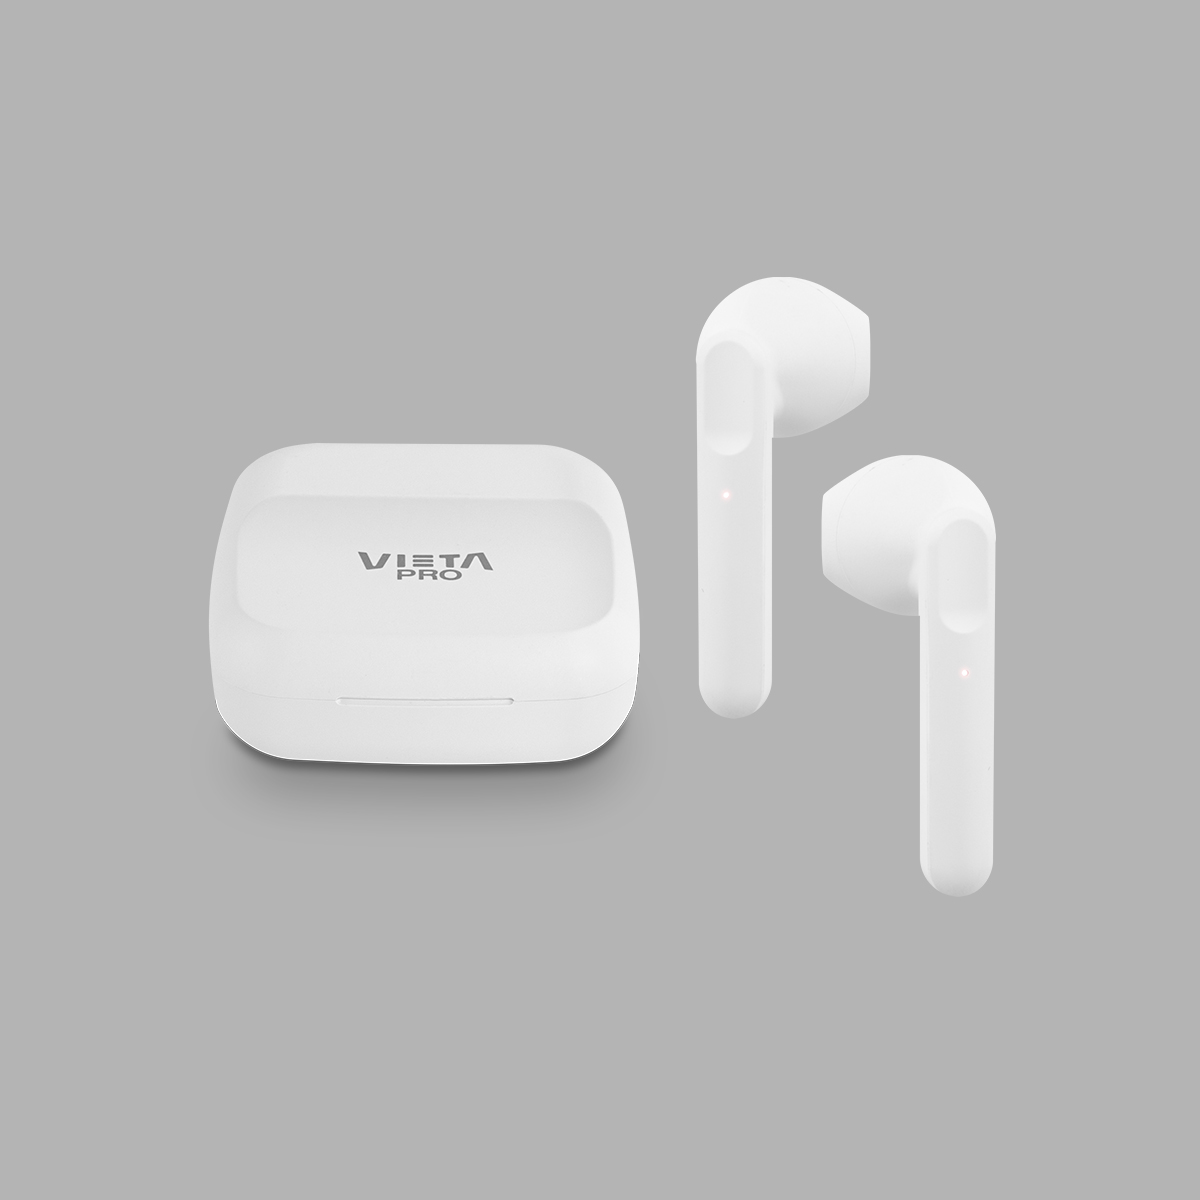 Vieta Pro - Auriculares Track 2 con Bluetooth 5.0, True Wireless, micrófono,  Touch Control, autonomía de 20h